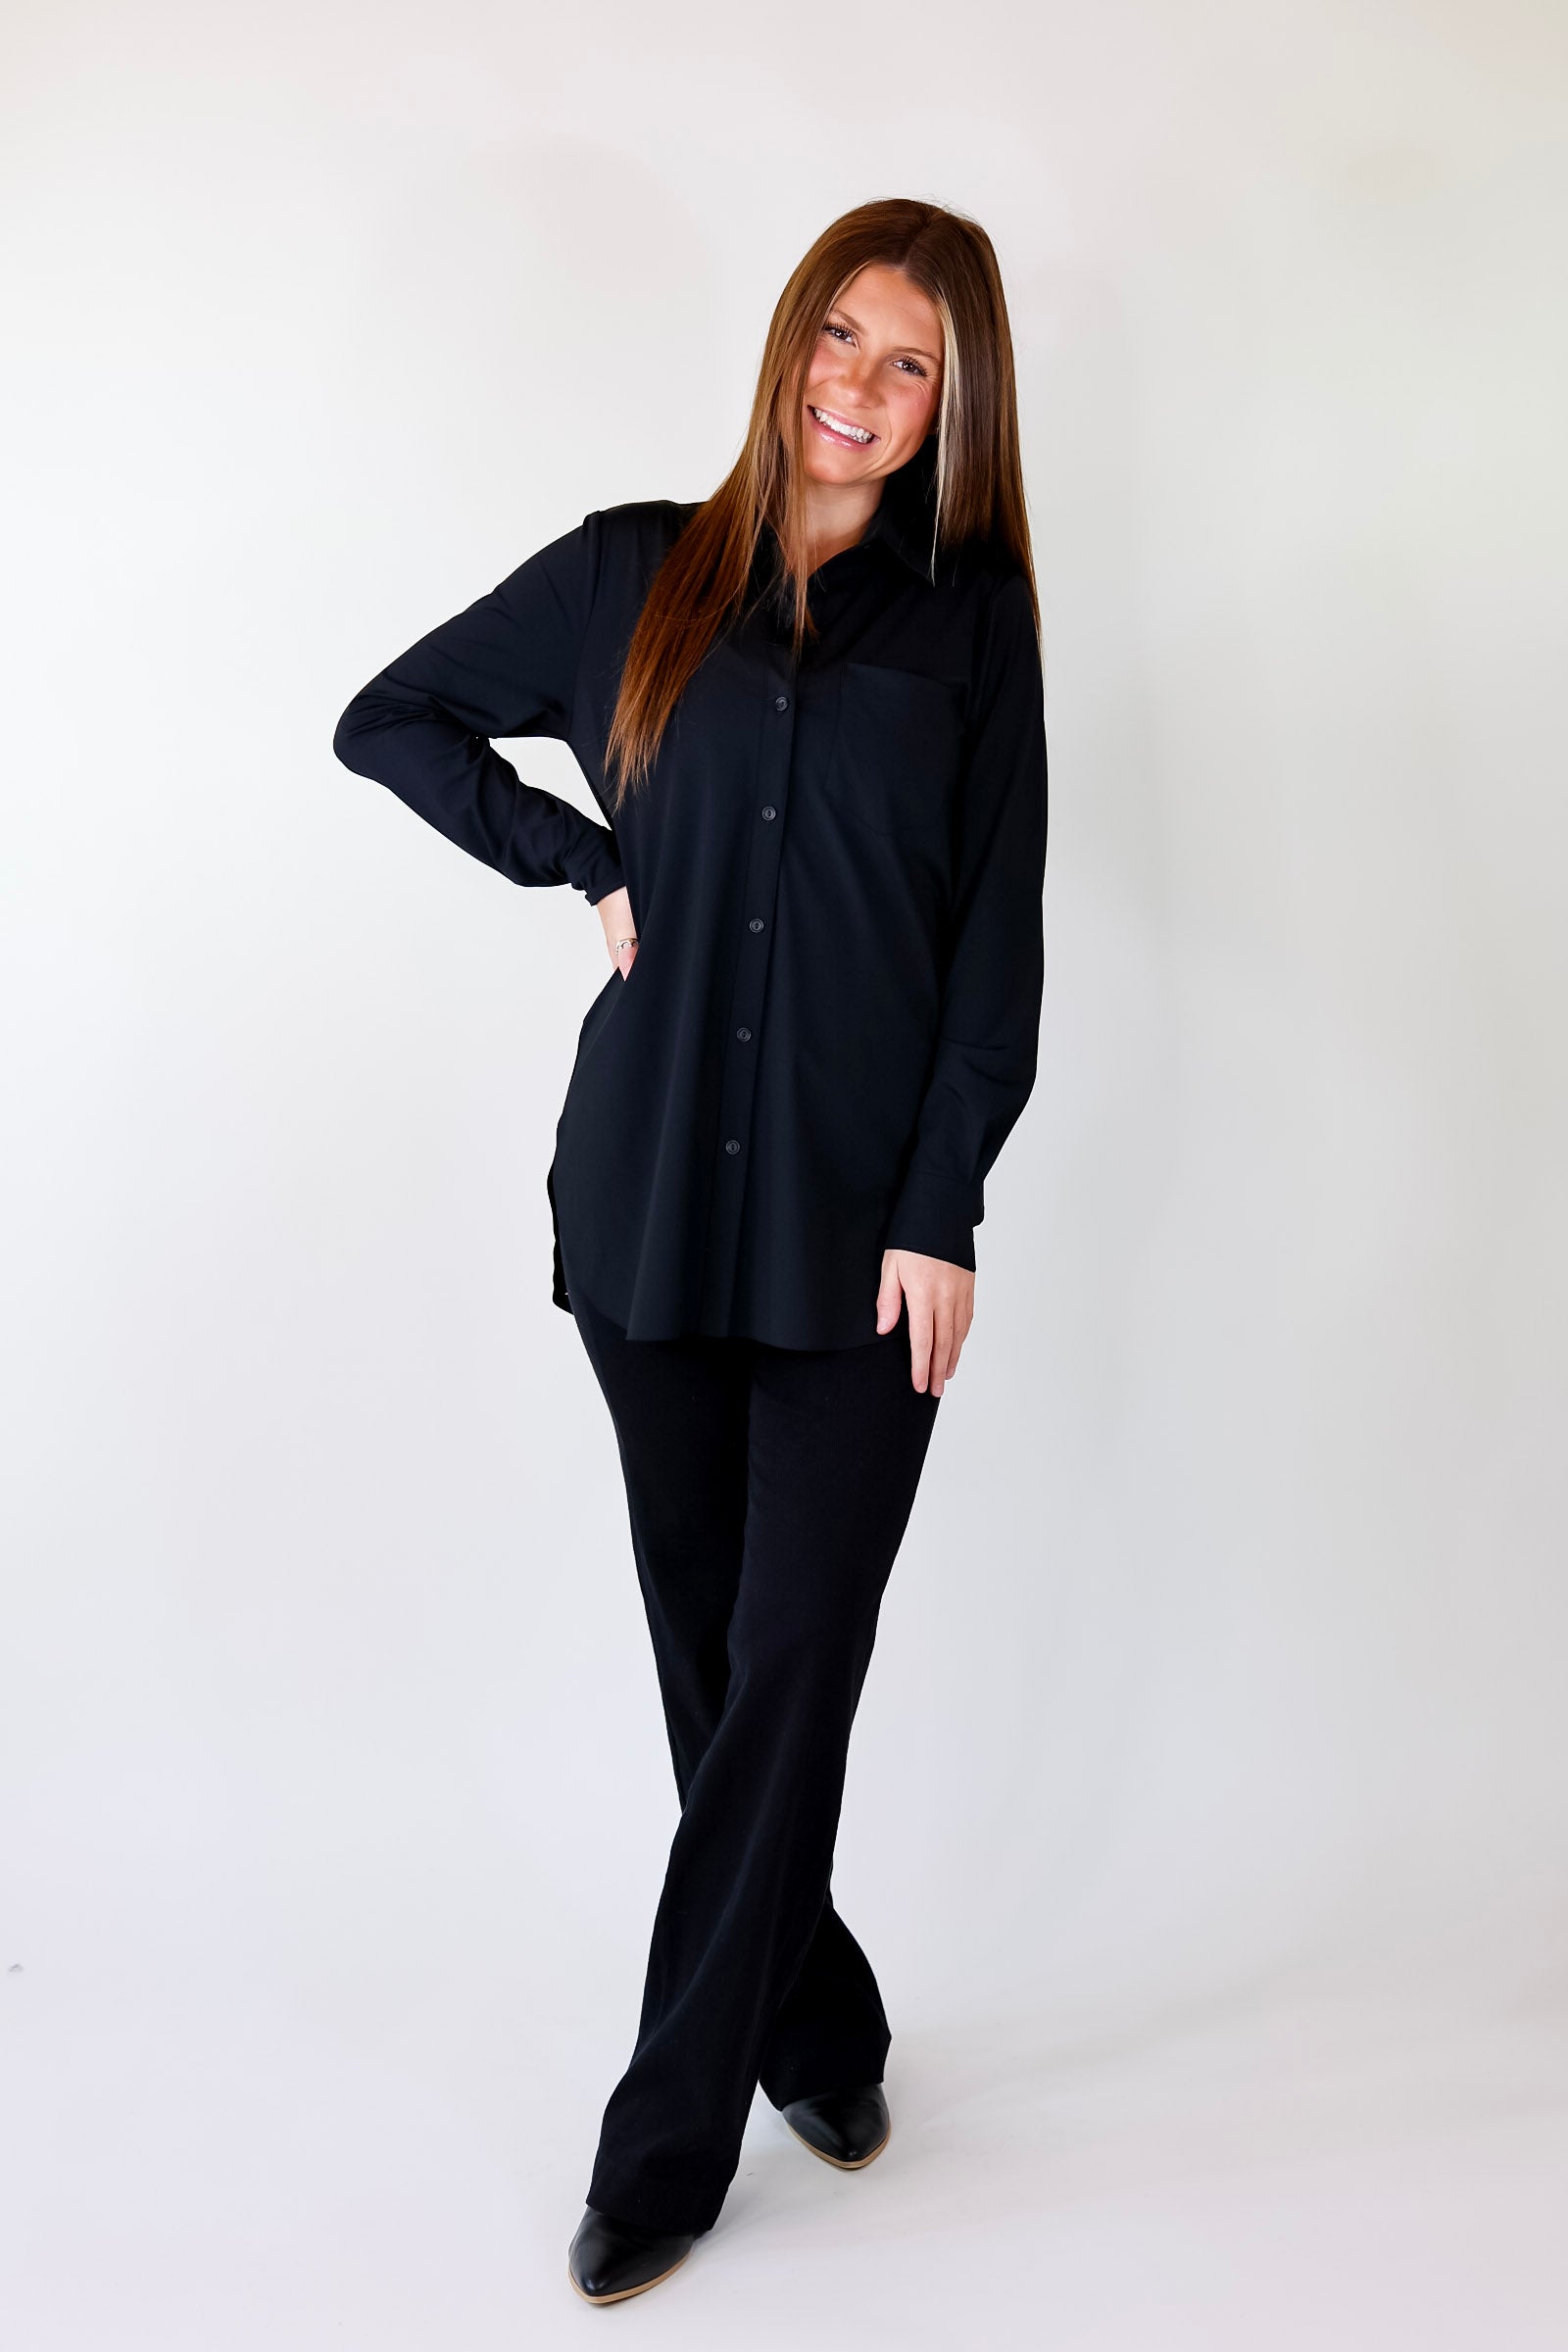 Lyssé | Schiffer Button Down Dress Shirt in Black - Giddy Up Glamour Boutique